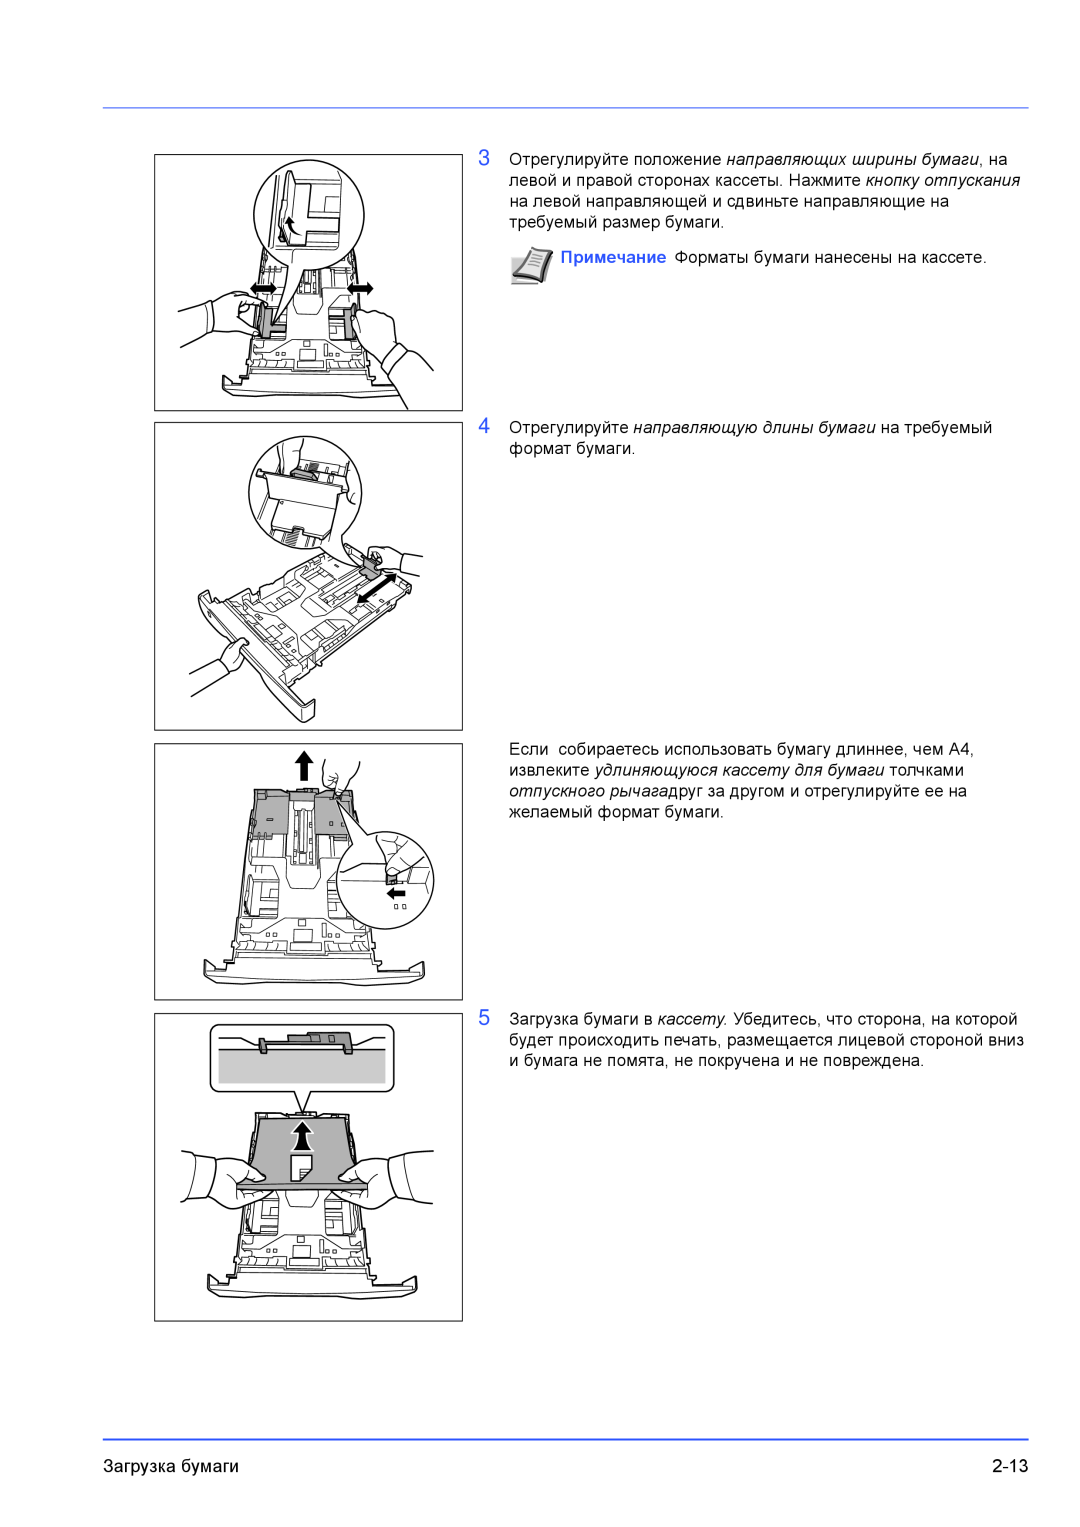 Kyocera FS-1100, FS-1300D manual 4 Отрегулируйте направляющую длины бумаги на требуемый формат бумаги 